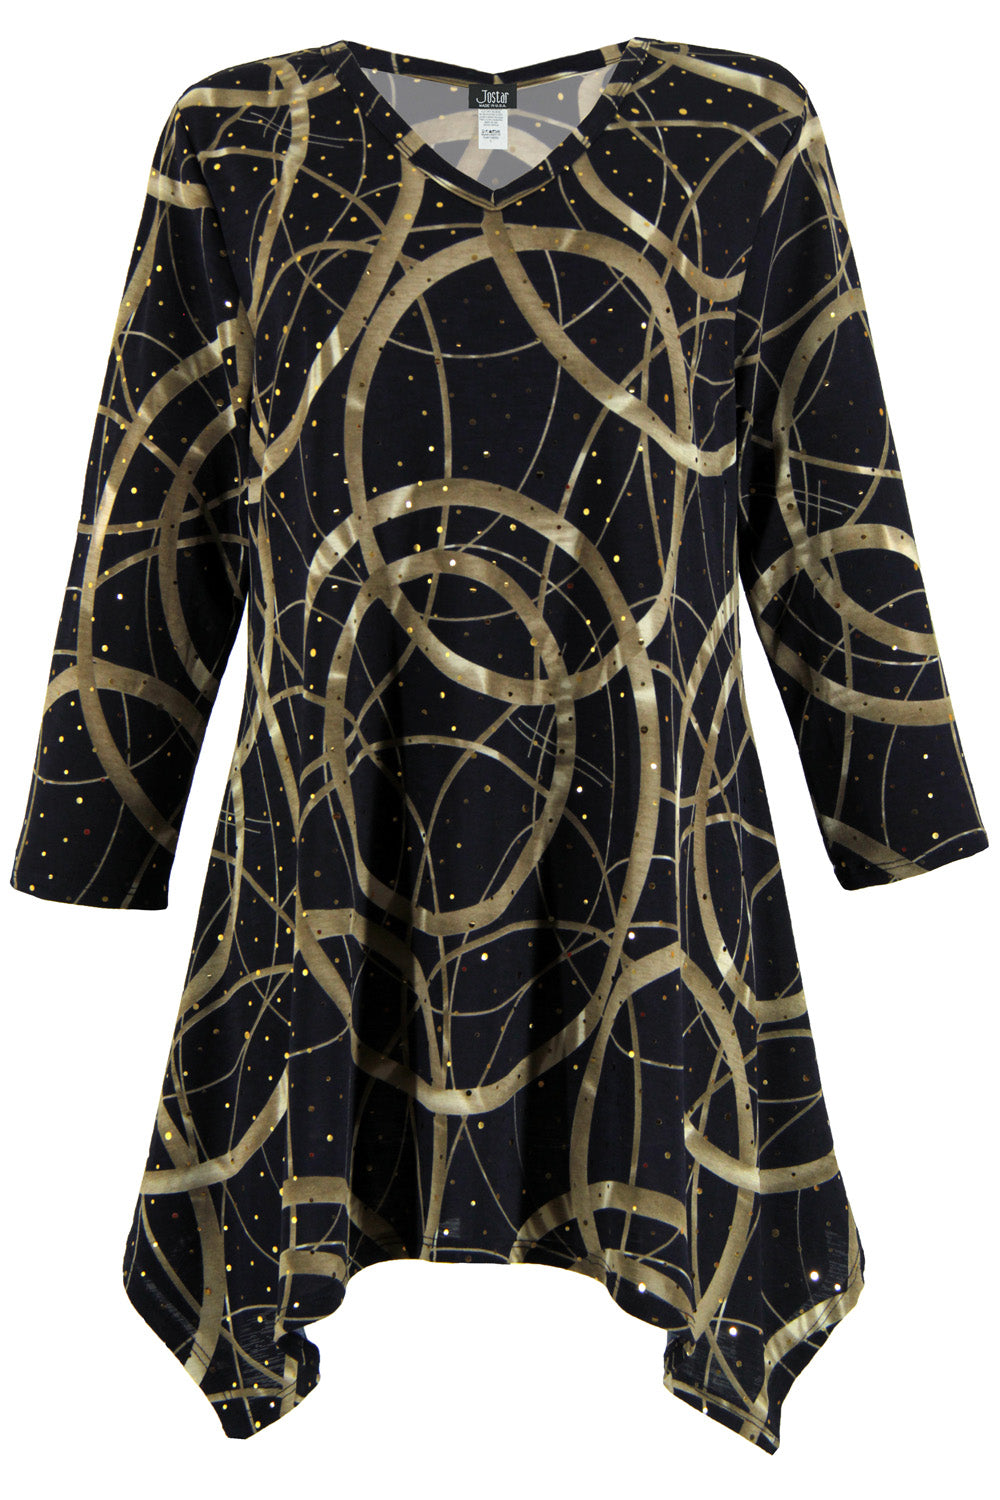 Jostar Women's Glitter V-Neck Binding Top 3/4 Sleeve Print, 313GL-QP-G008 - Jostar Online